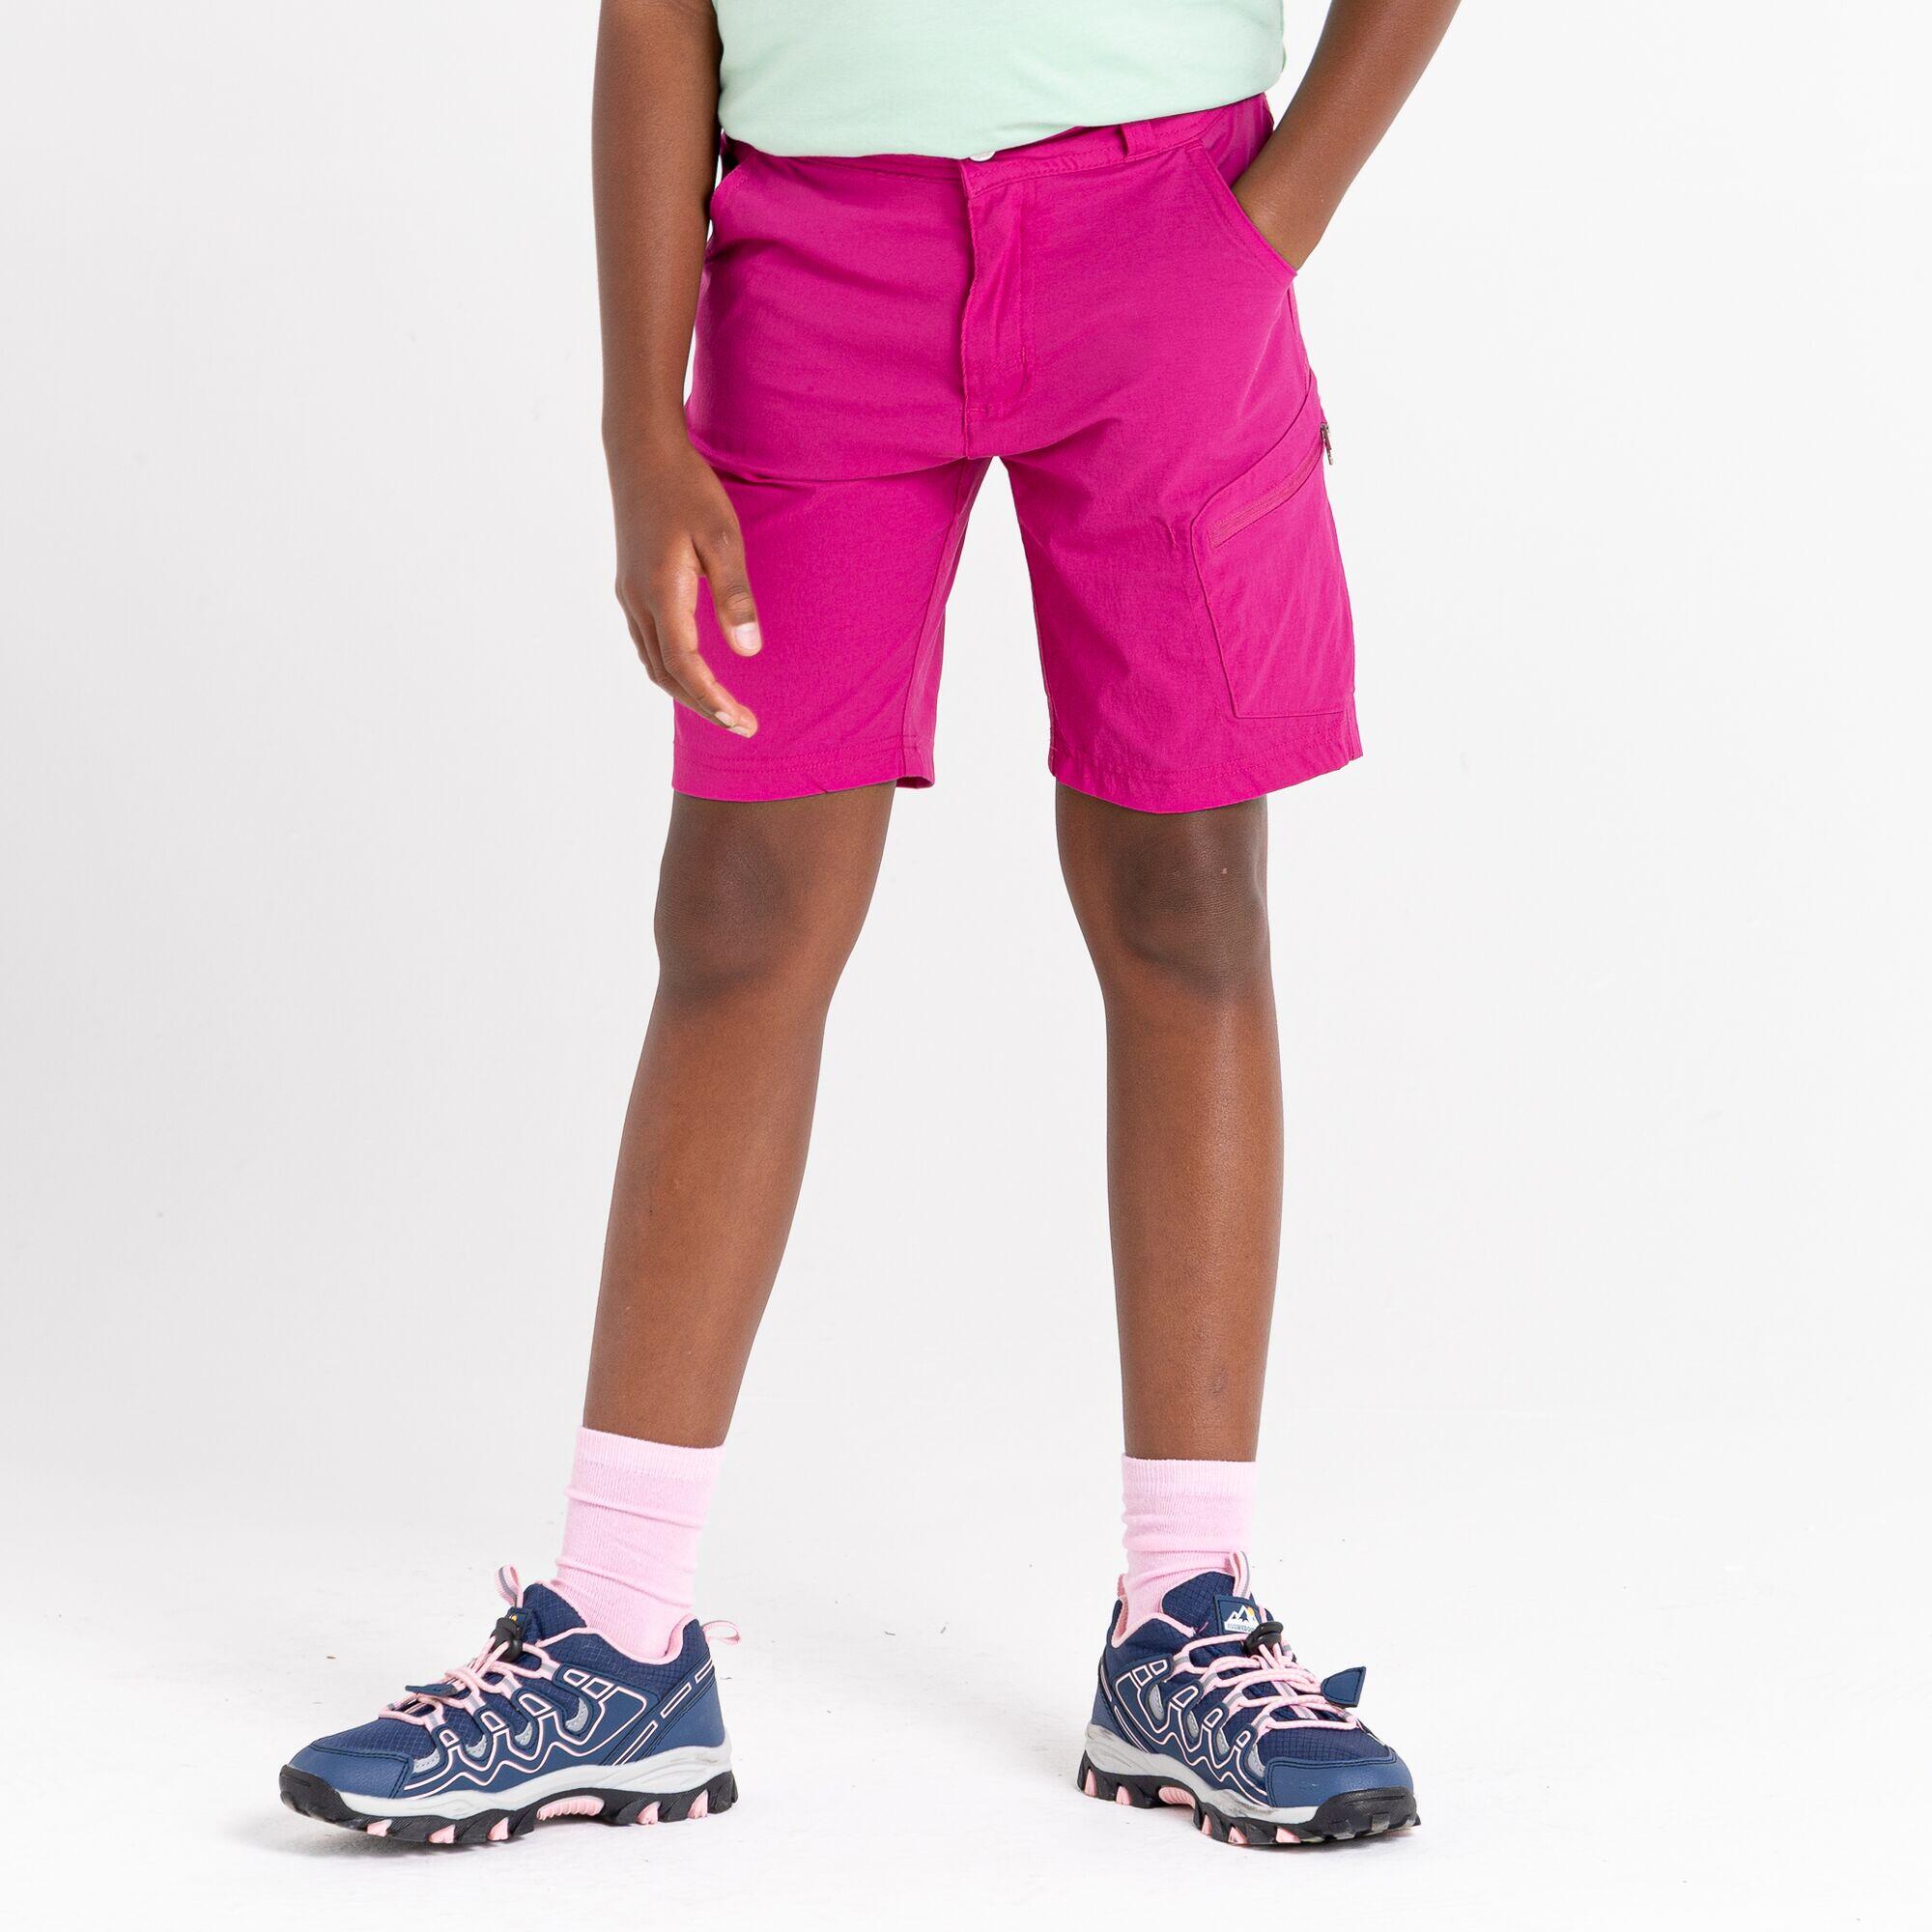 Reprise II Kids Hiking Shorts - Fuchsia Pink 2/5